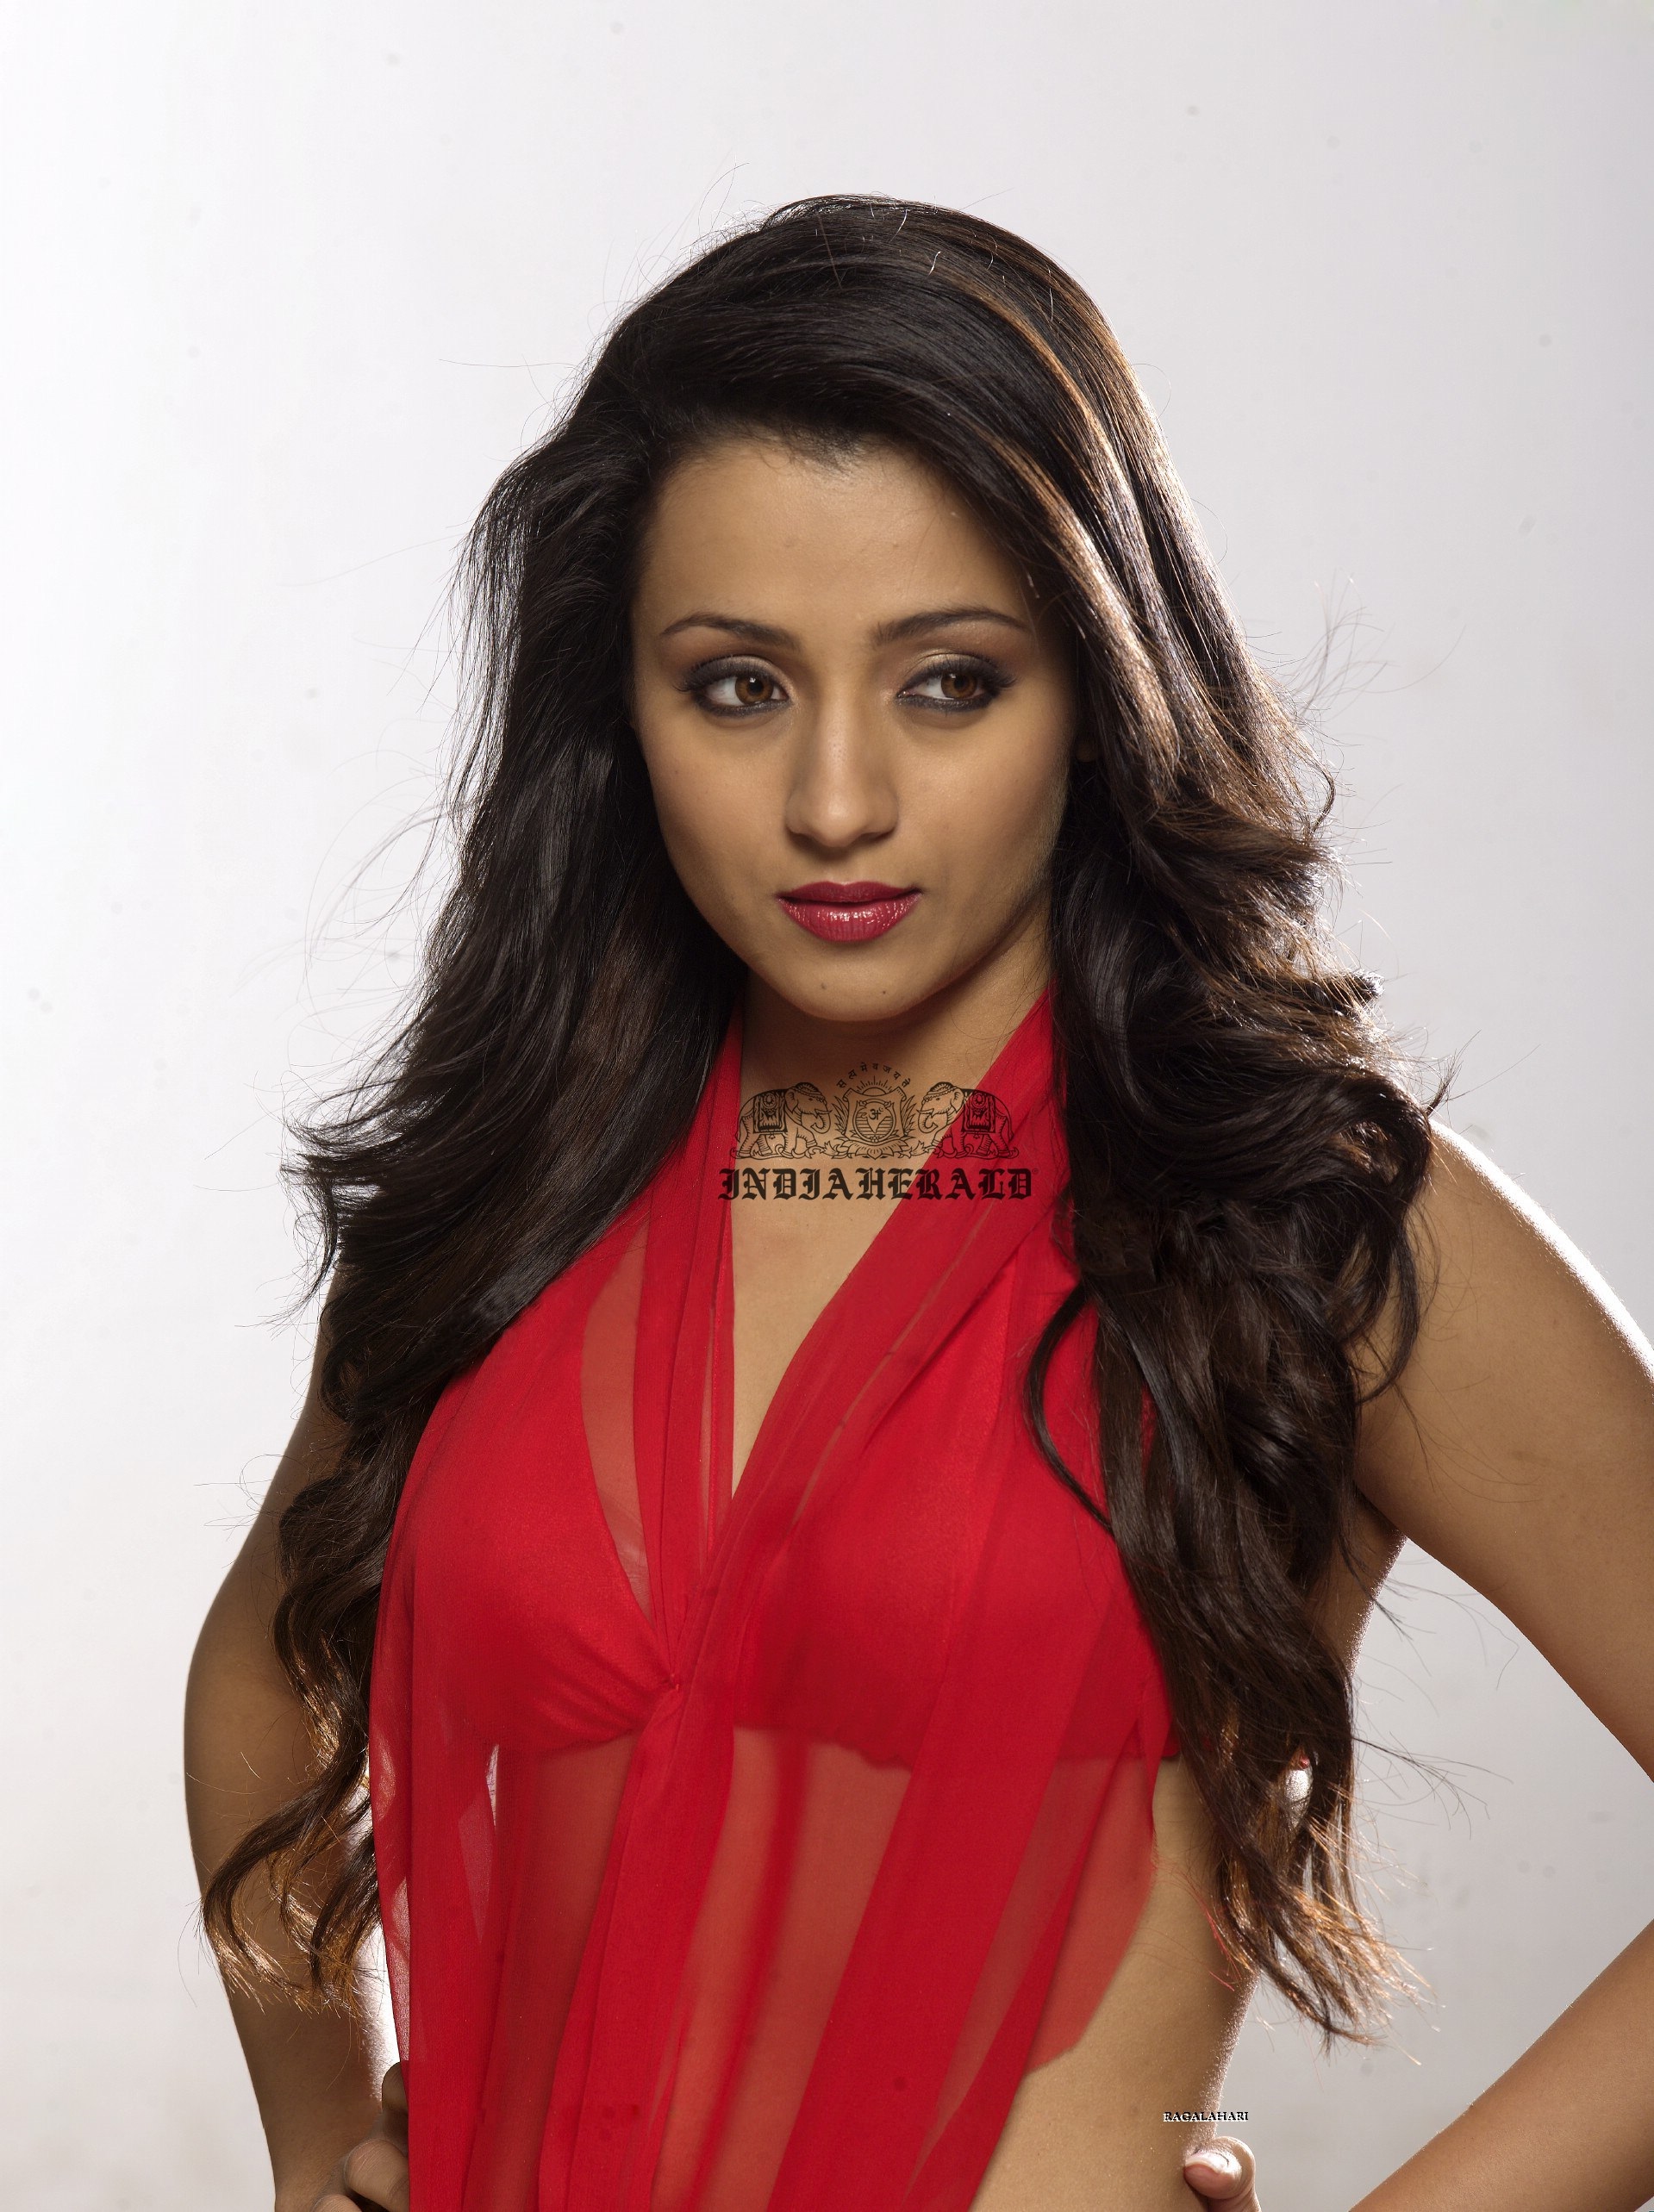 Red Hot High Clarity Photos of Trisha Krishnan in Brassiere Set 3